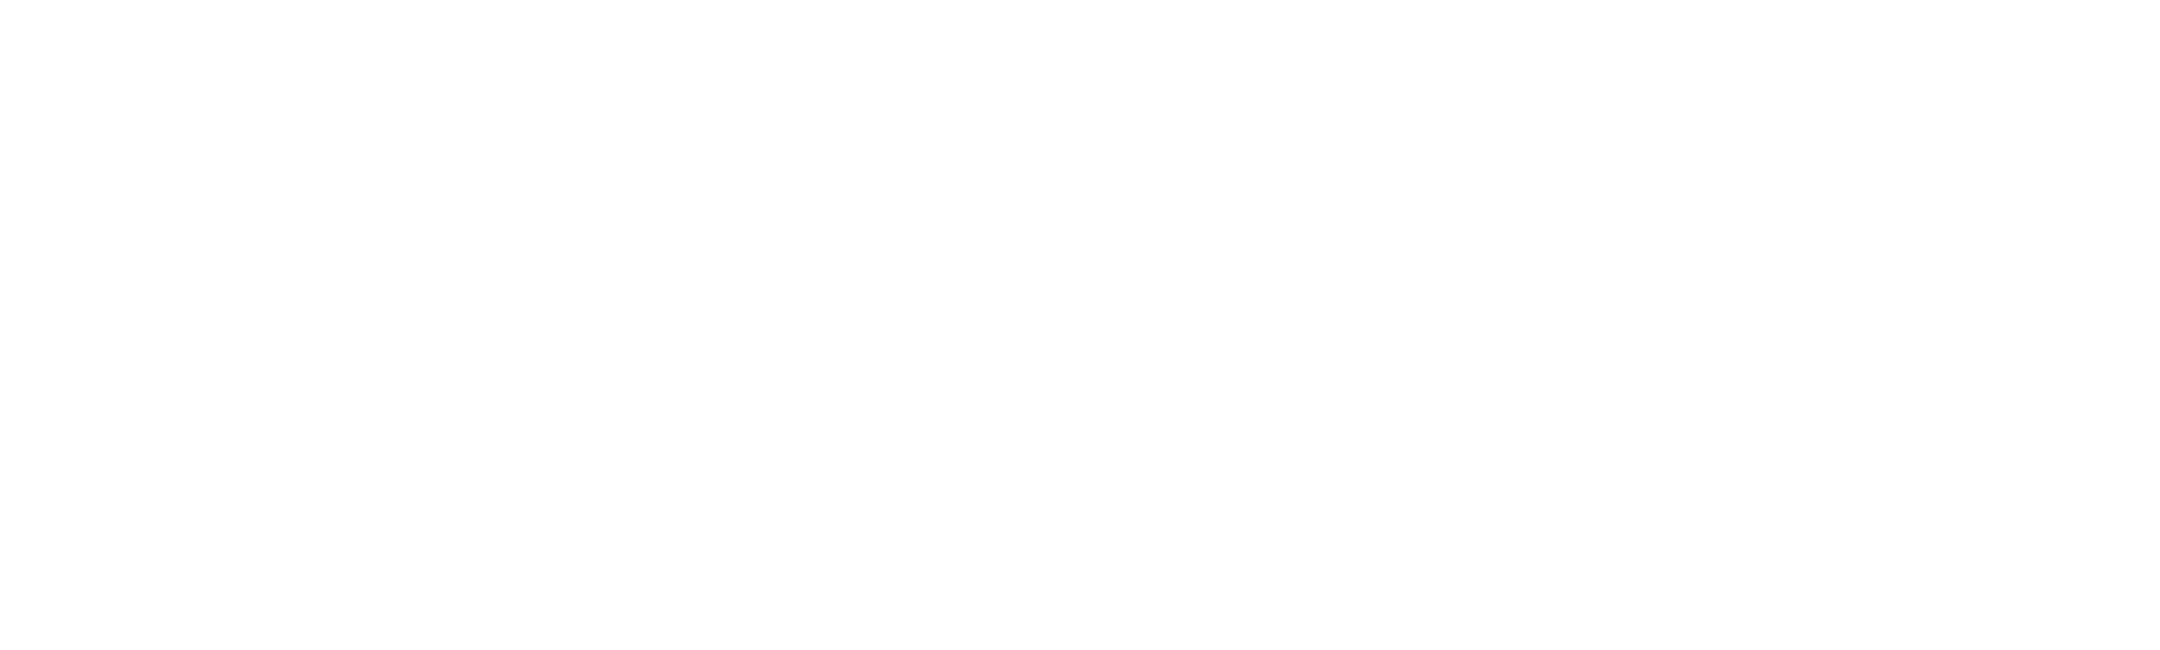 Cryptocurrency Greiðslukerfi - FSFPAY.com